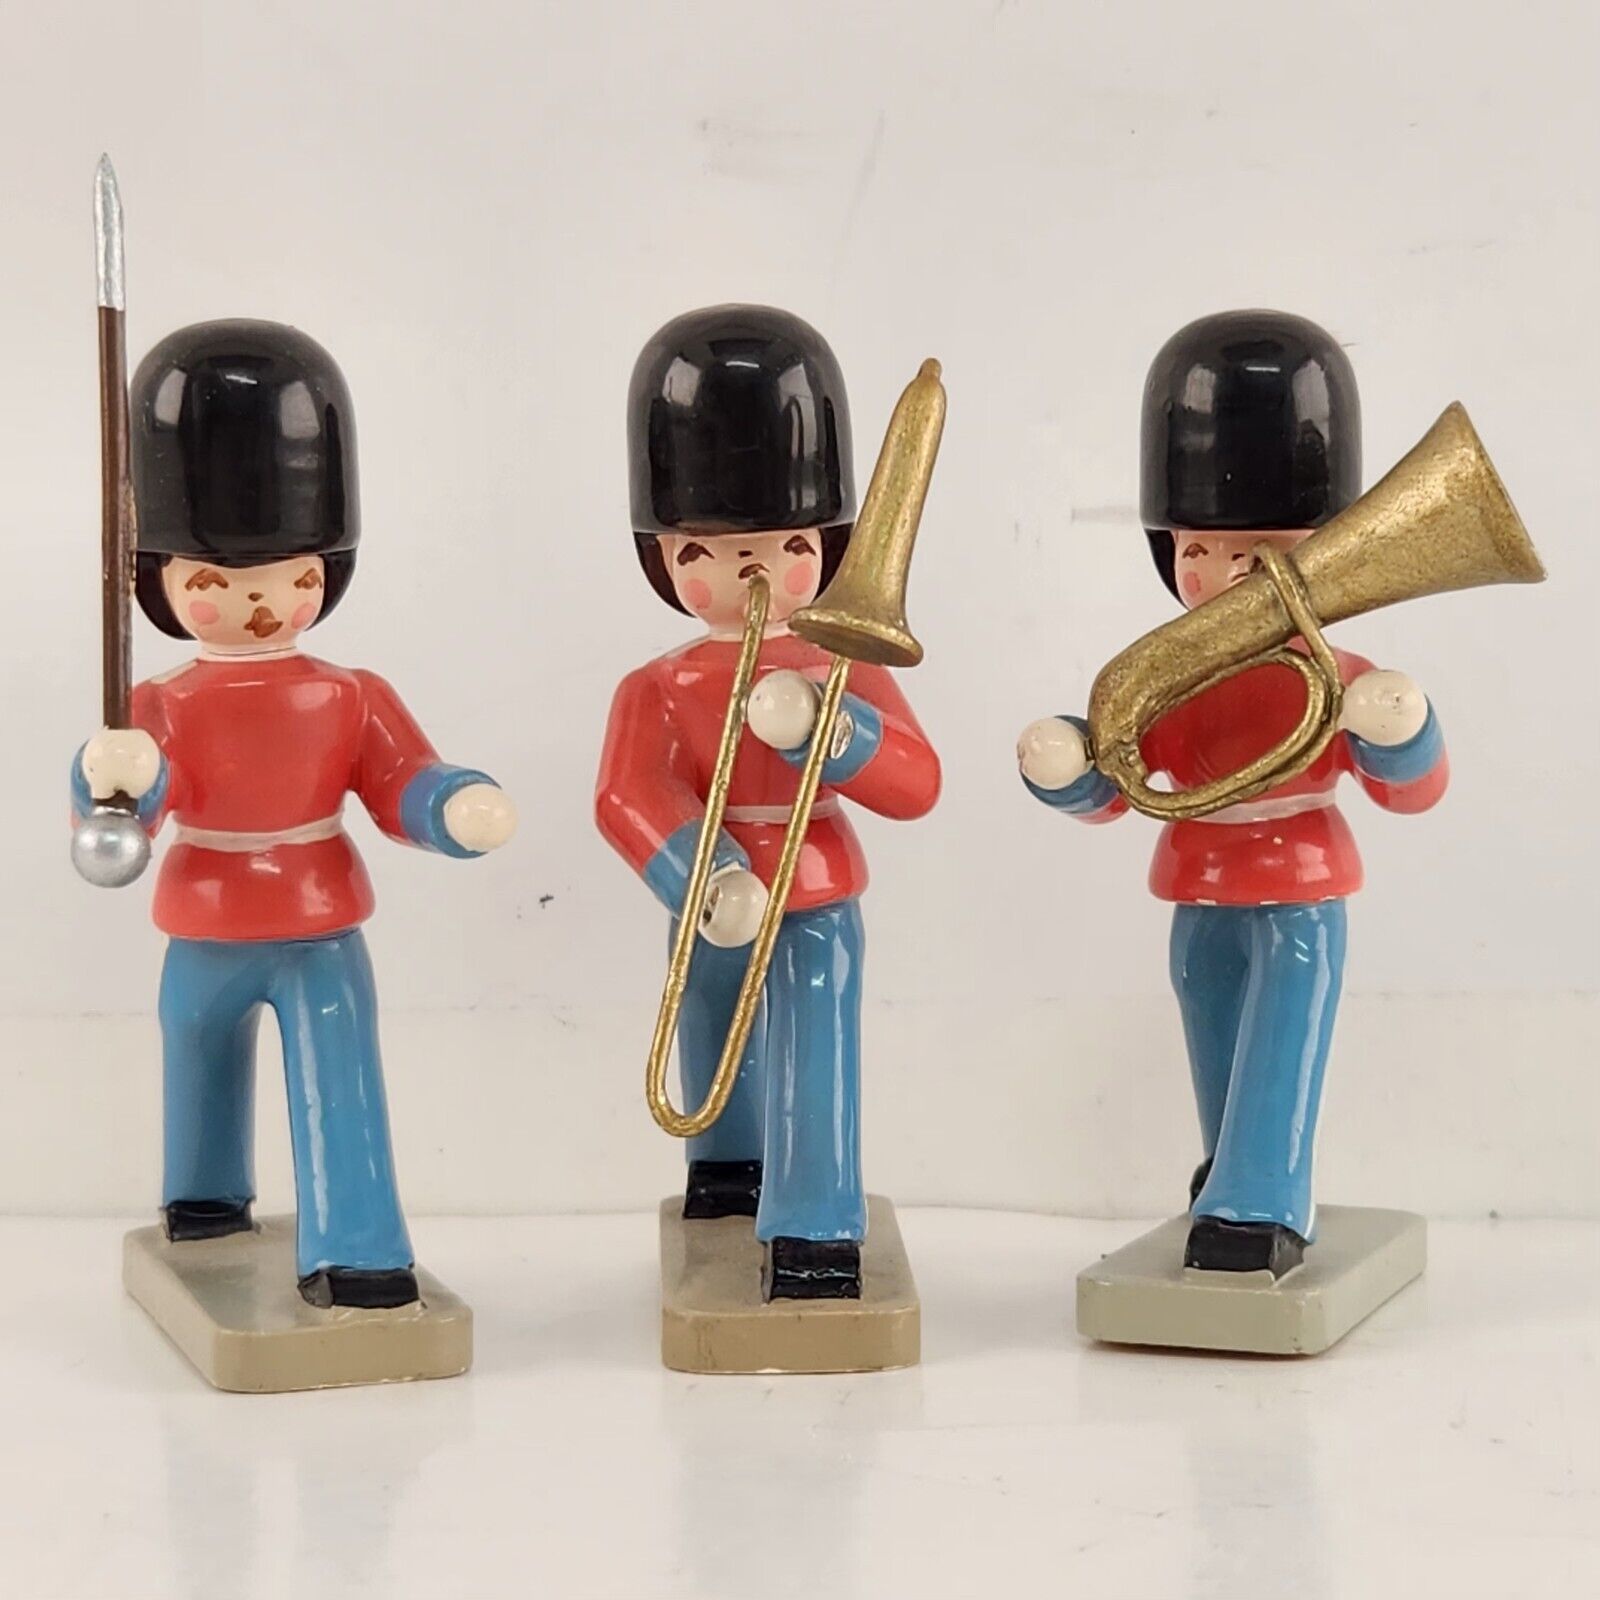 3 Pc Erzgebirge Expertic Royal Guard Marching Band Wood Musician Figurine Set 2½